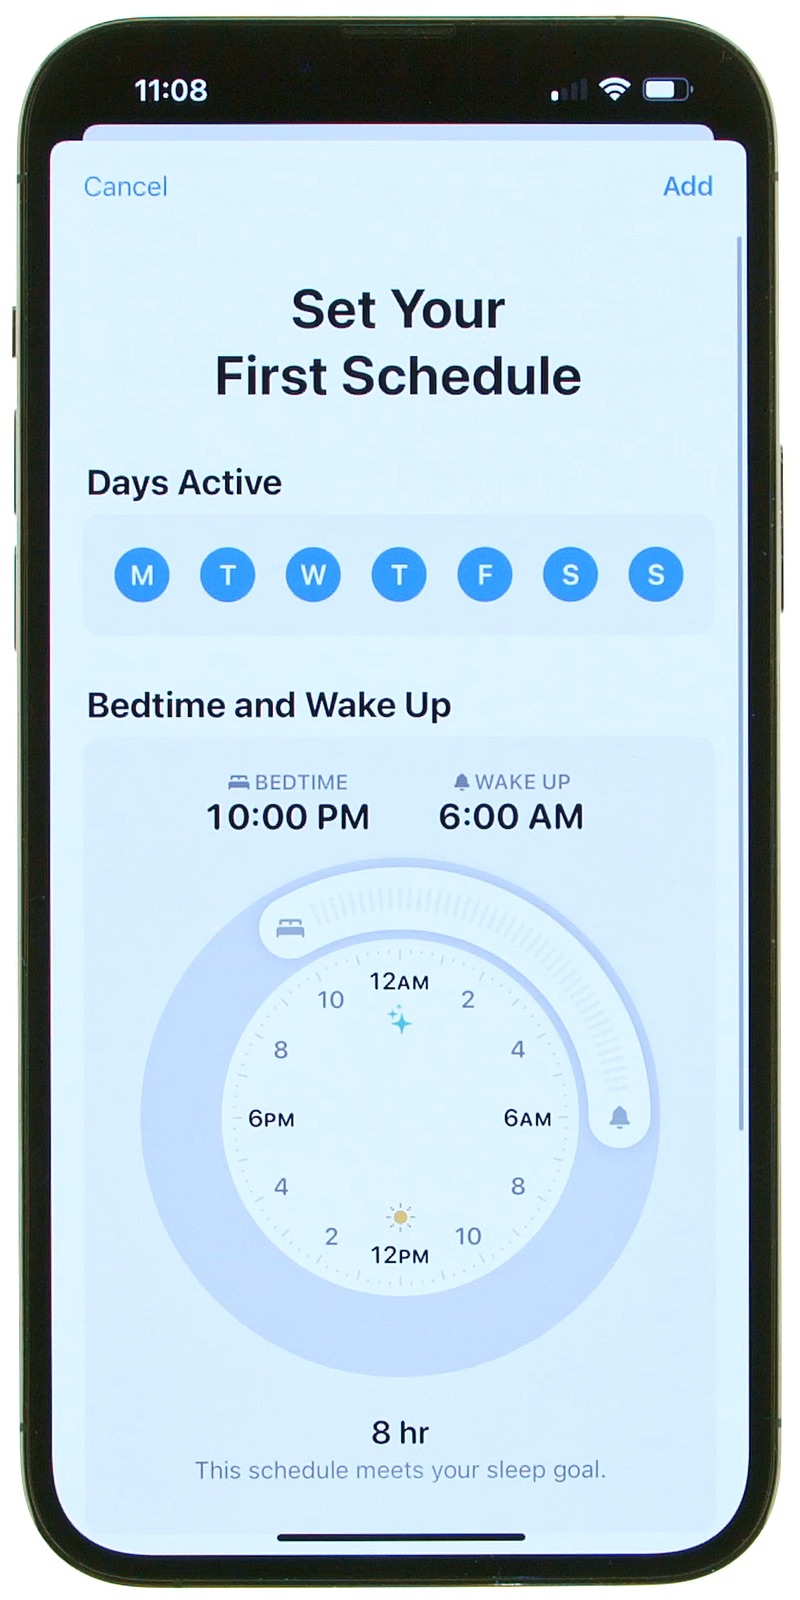 How to Turn On Sleep Mode on iPhone [Video]